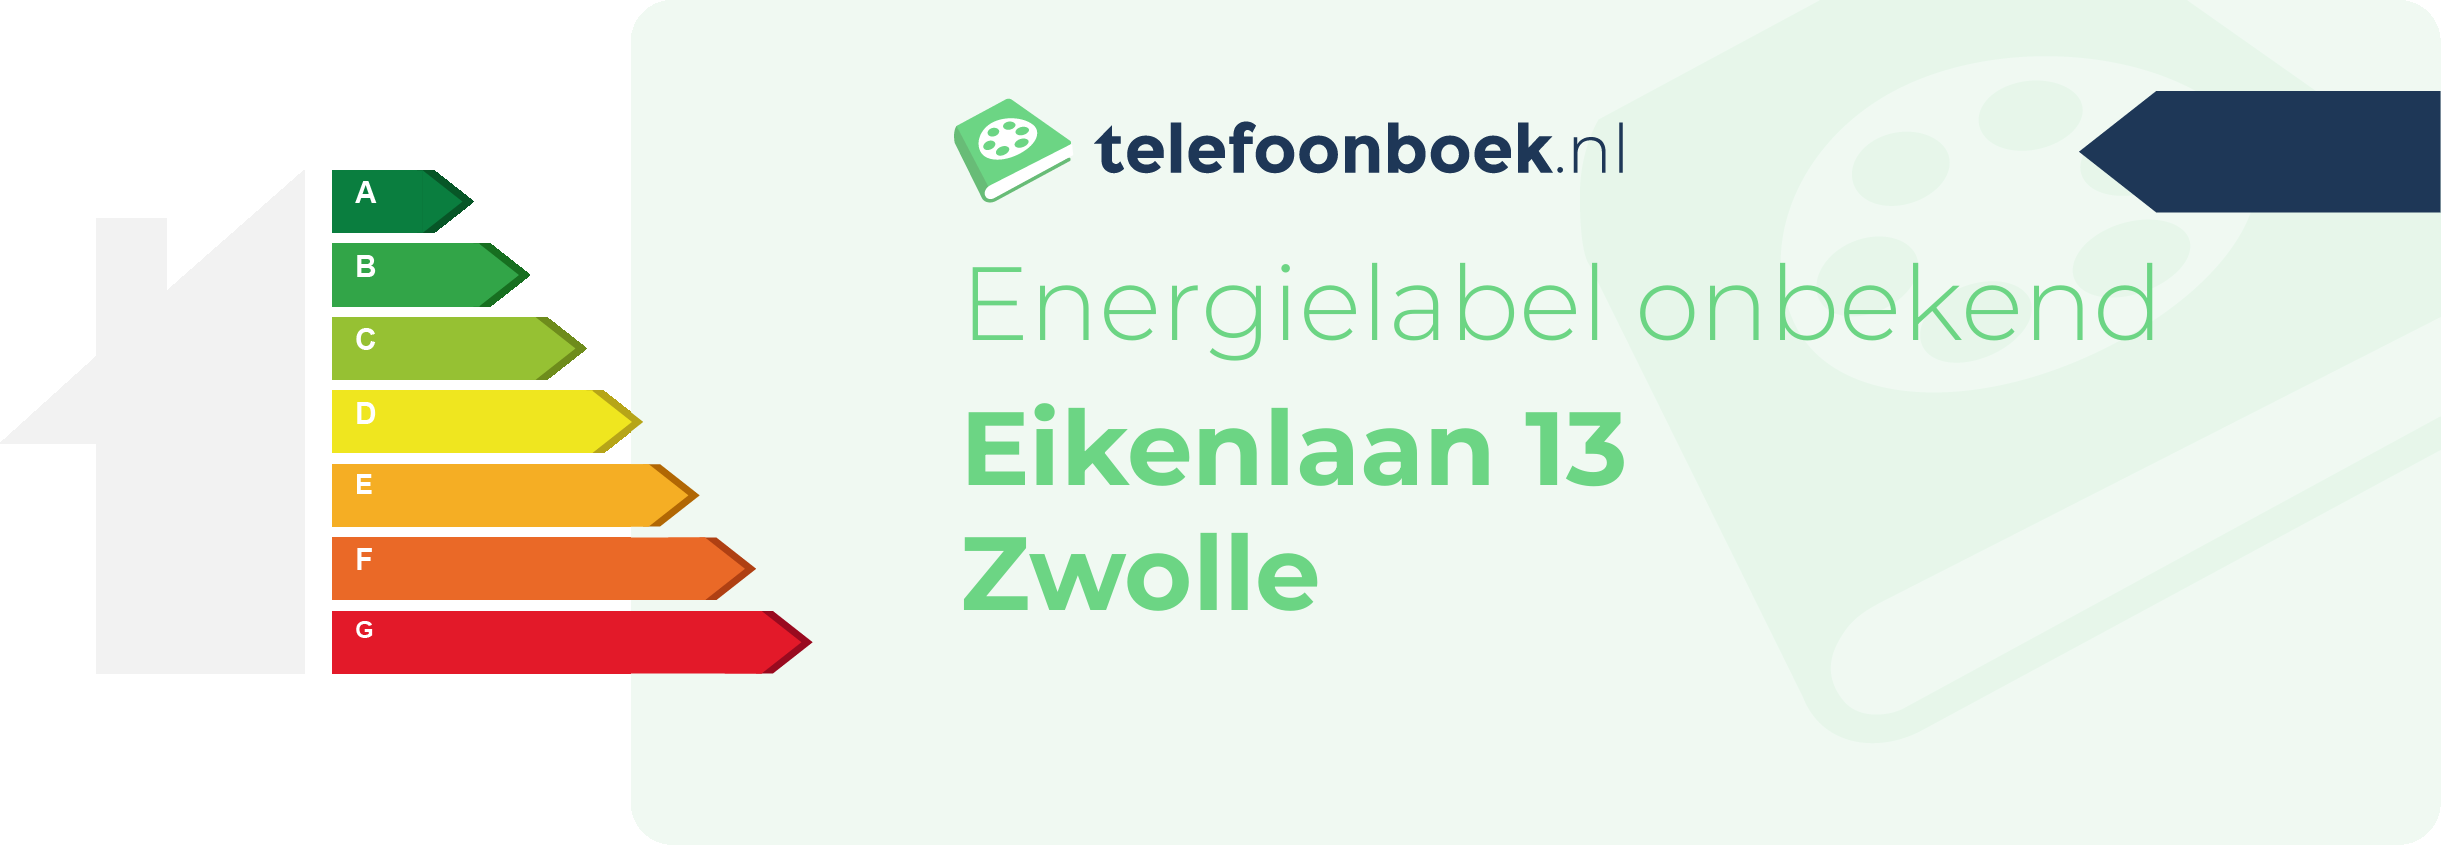 Energielabel Eikenlaan 13 Zwolle